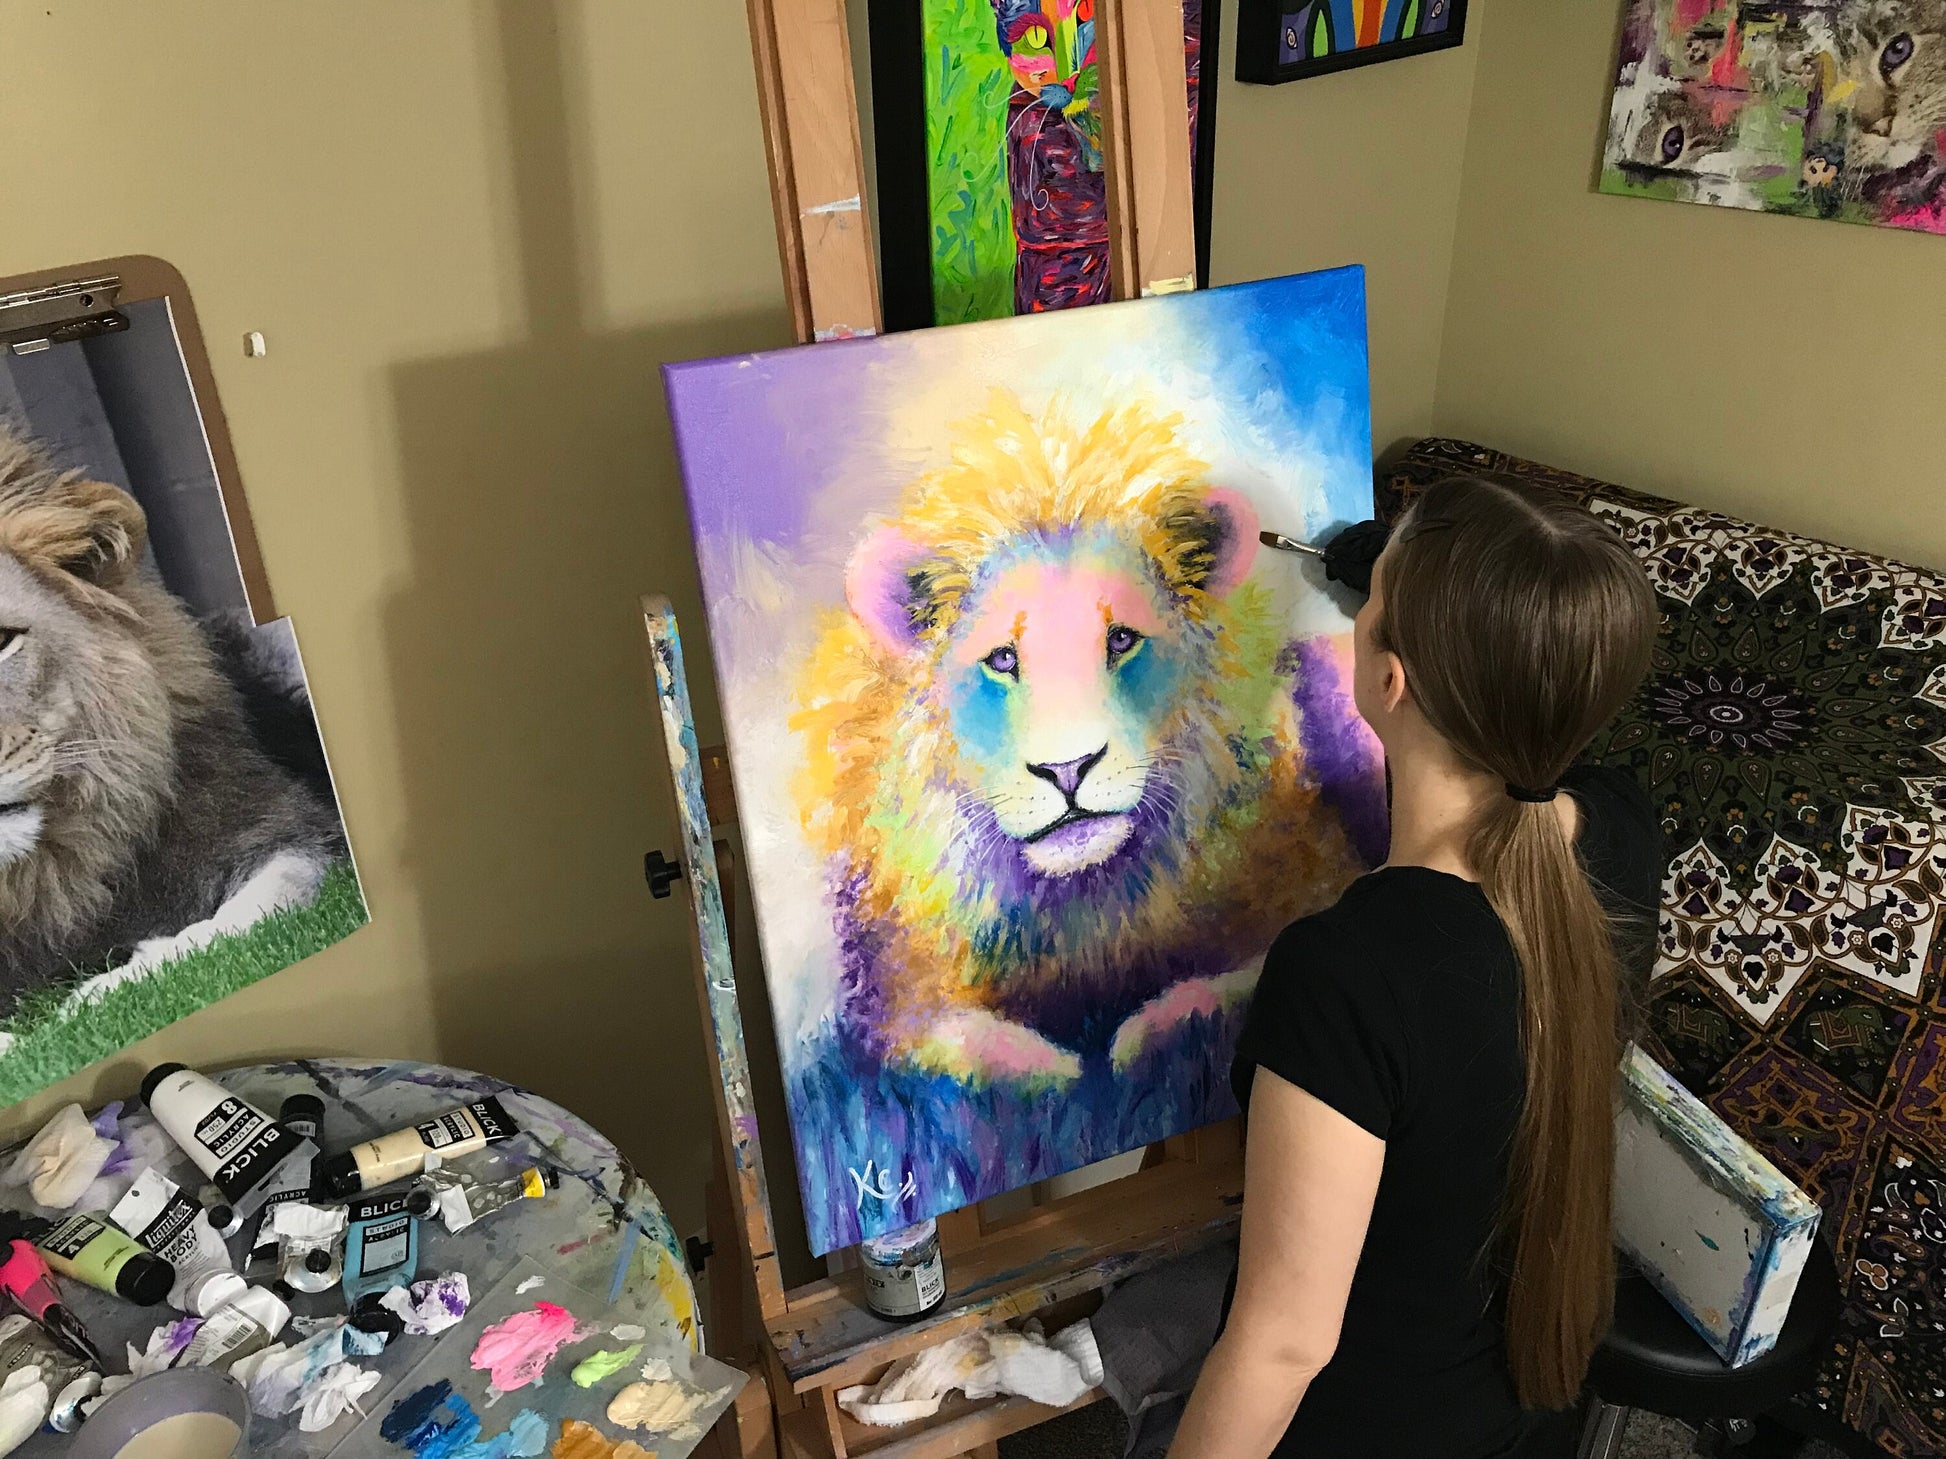 Original Lion Painting Acrylic on Canvas - 24x30"